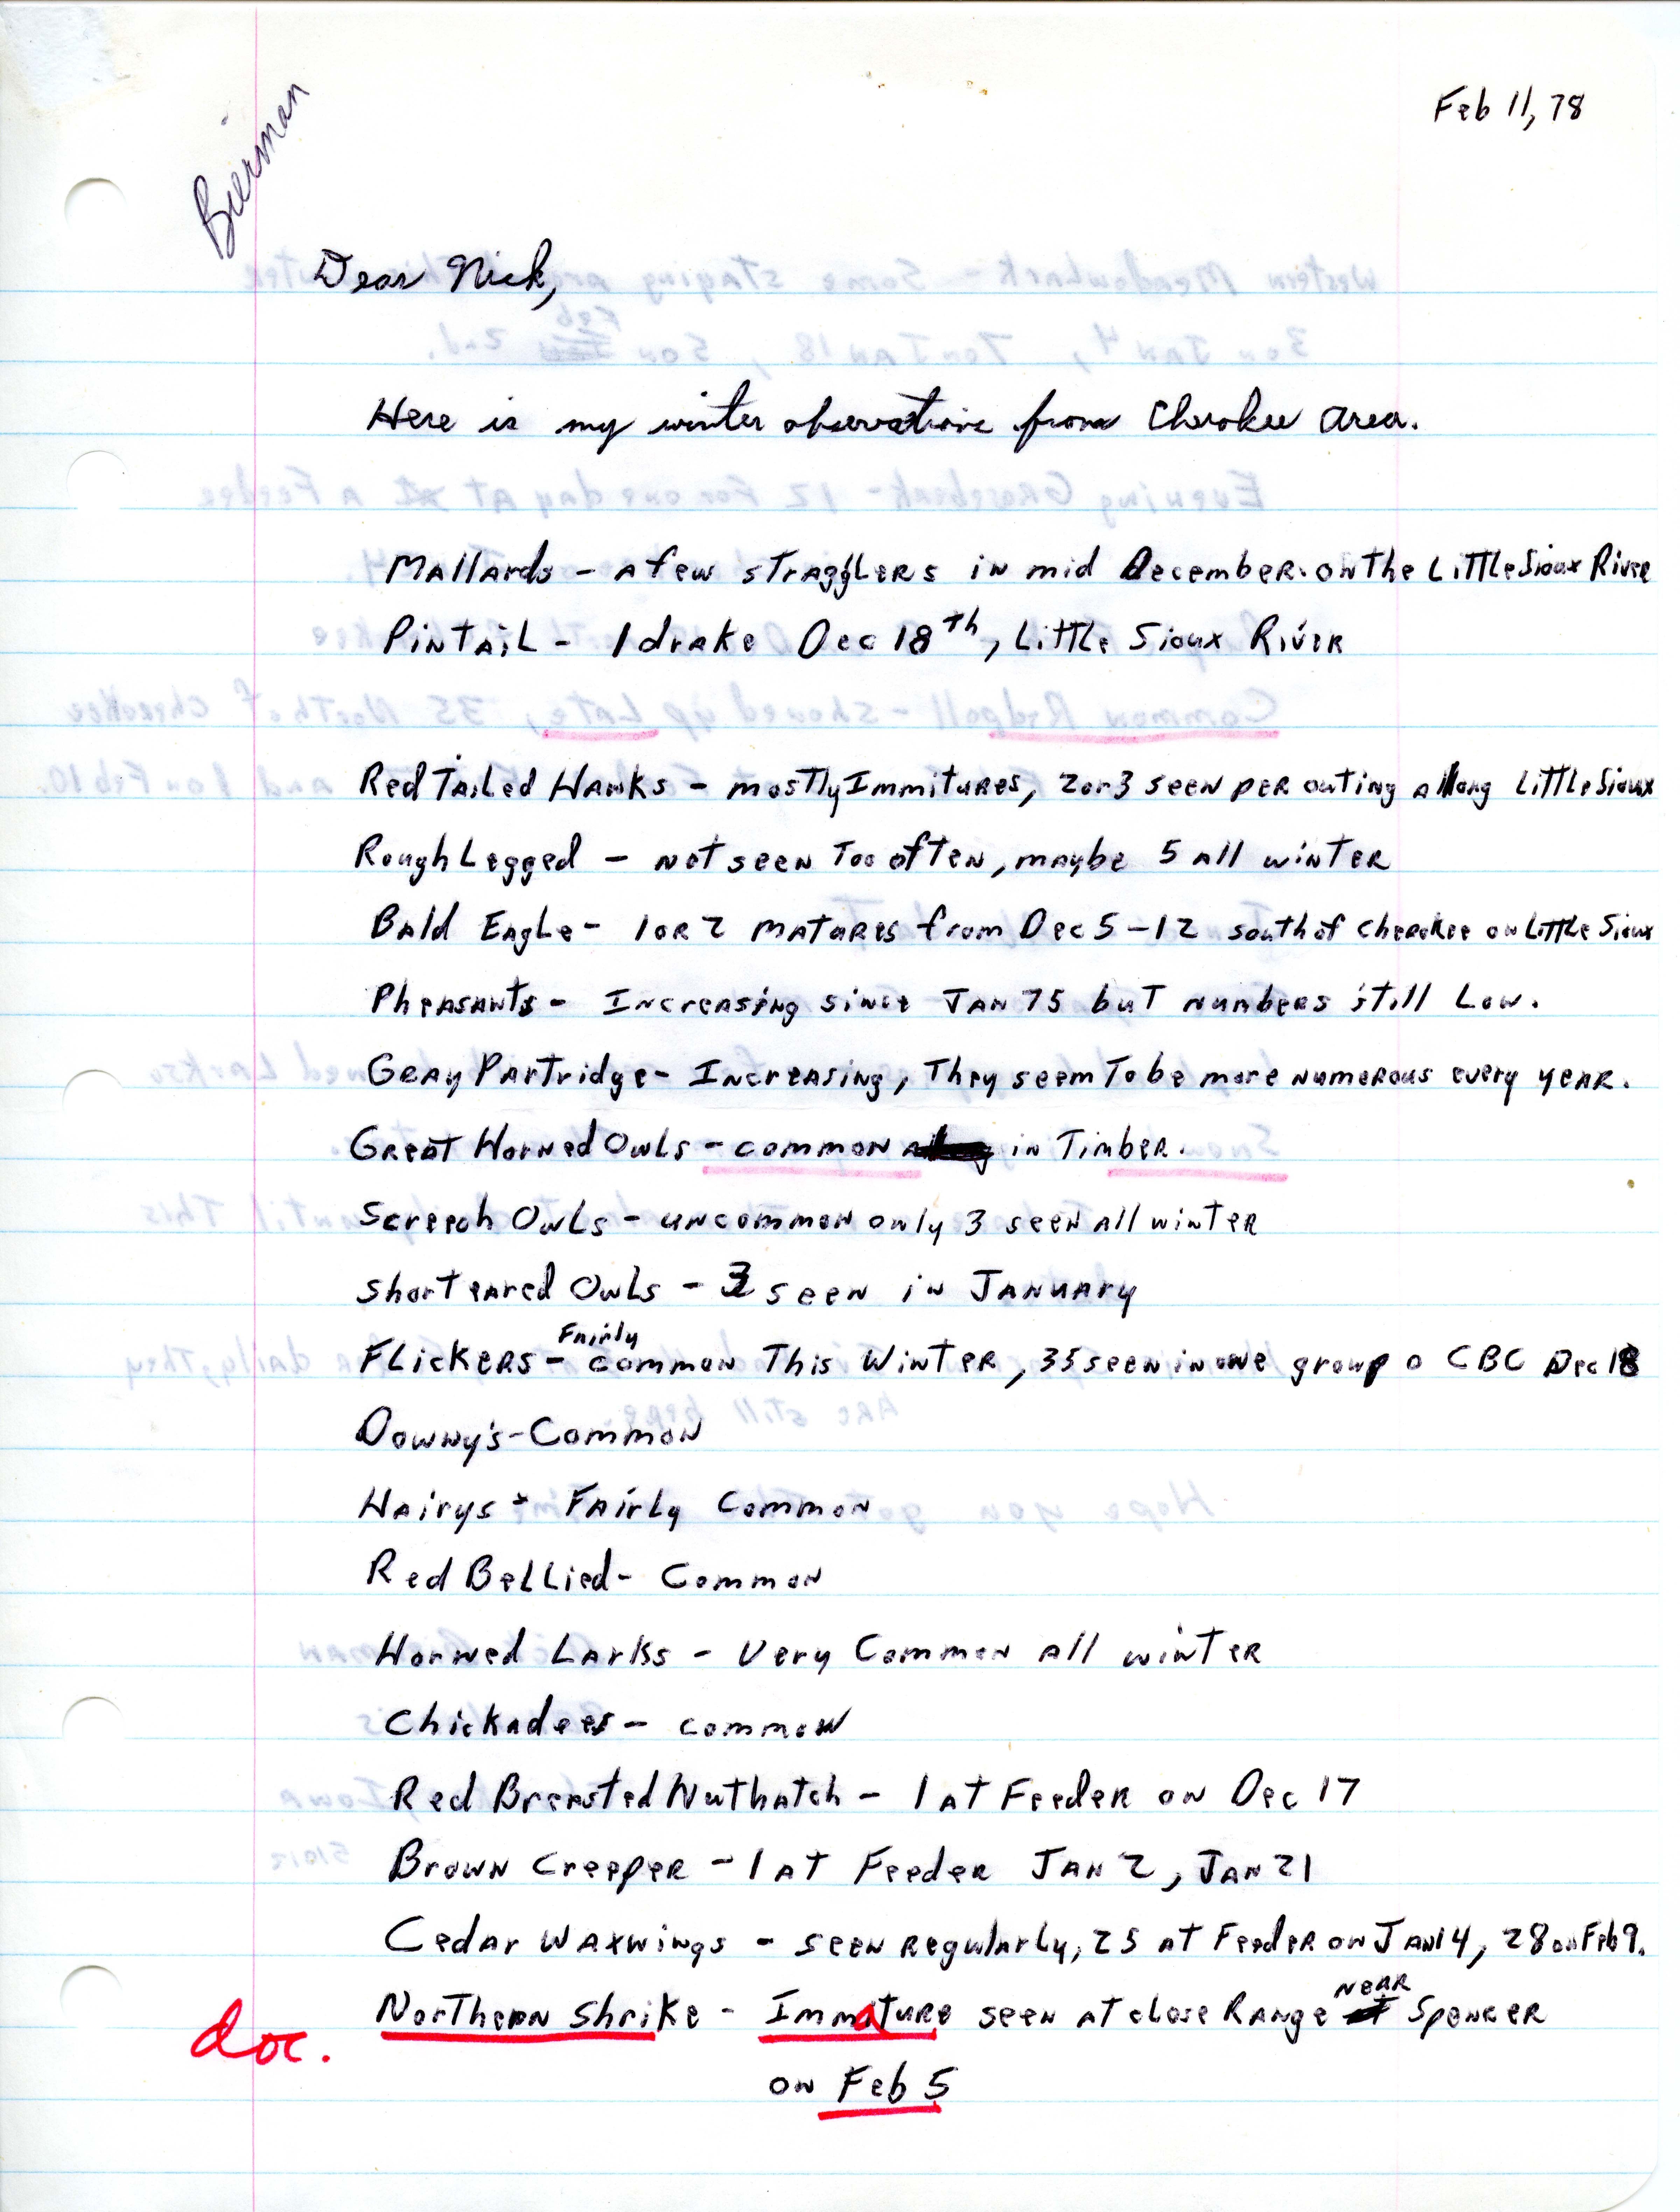 Dick Bierman letter to Nicholas S. Halmi regarding bird sightings, February 11, 1978